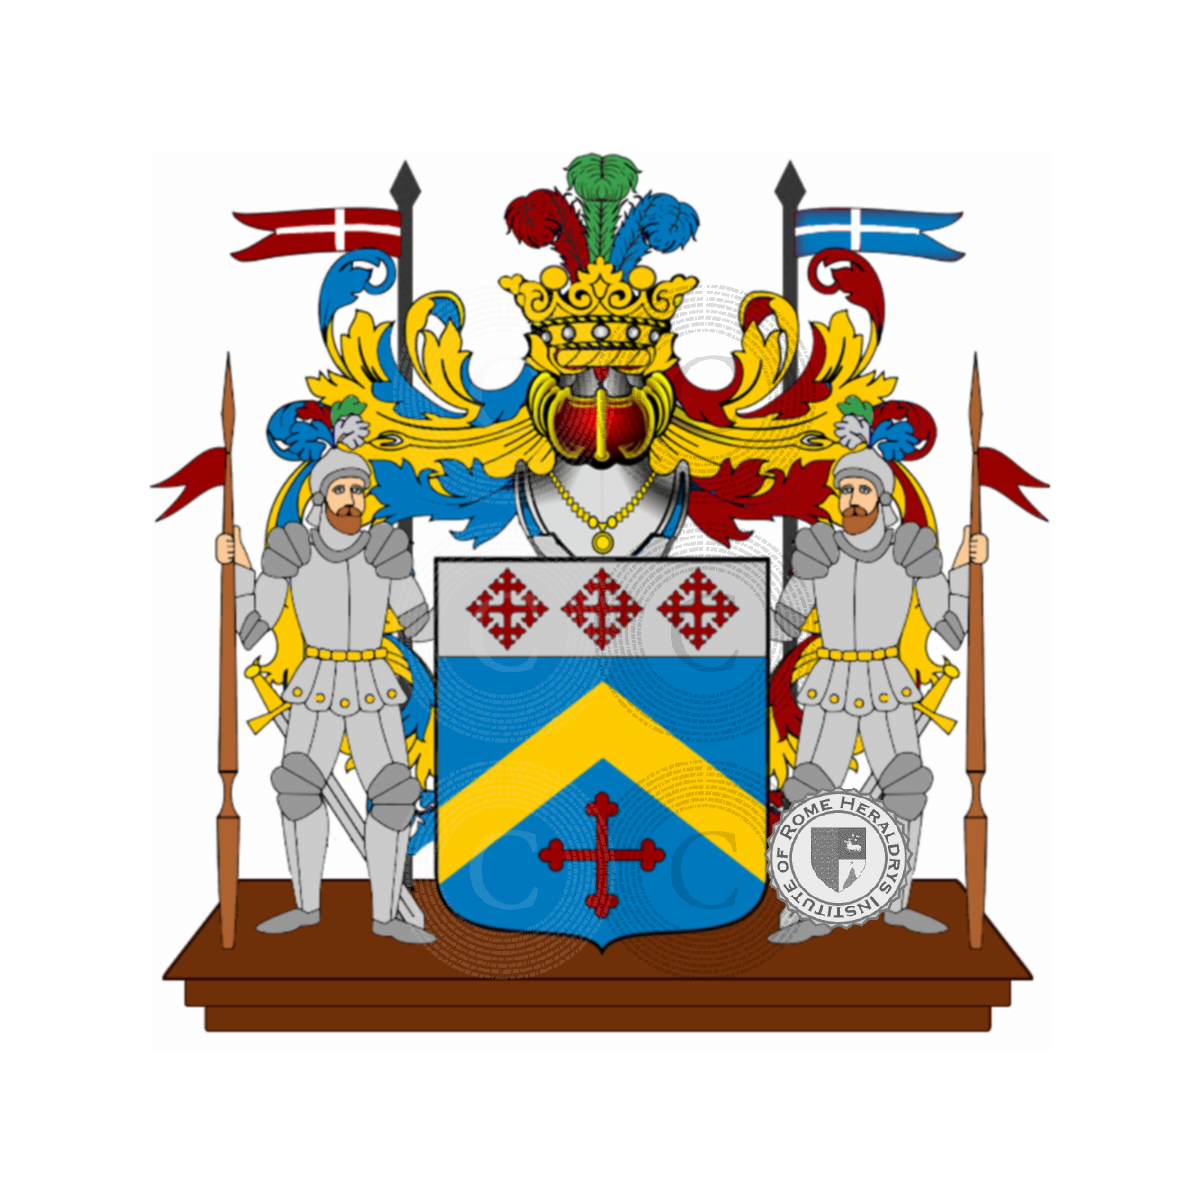 Wappen der Familie Sorentini